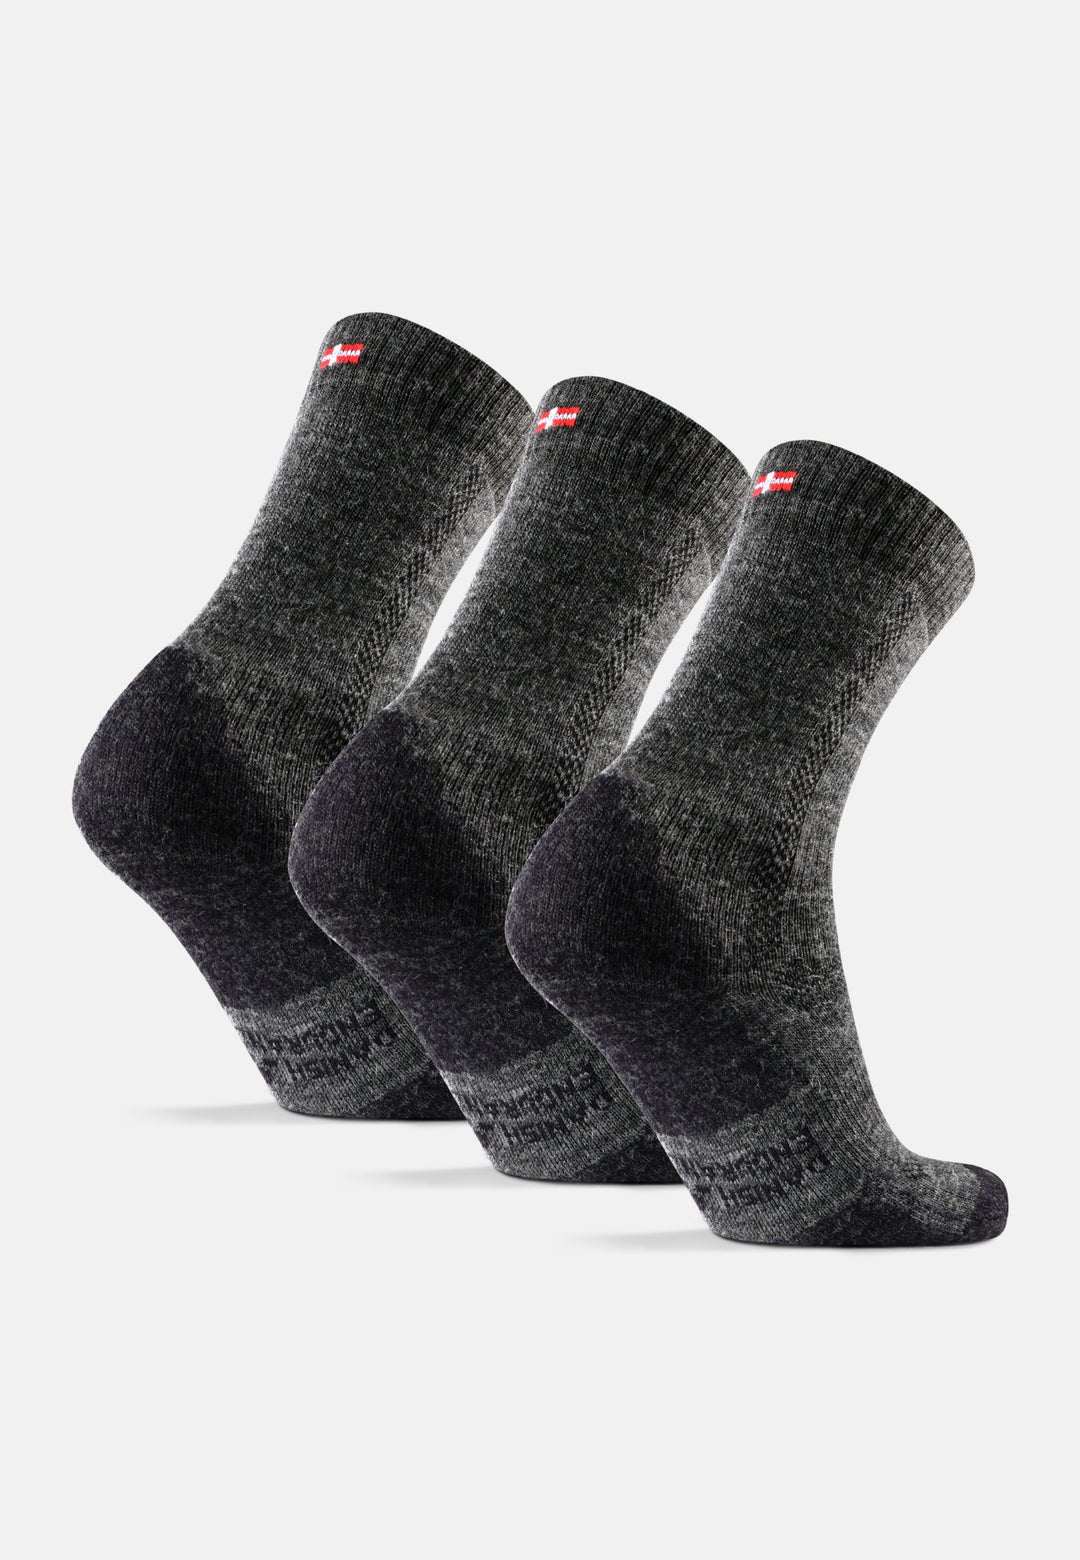 DANISH ENDURANCE Merino Wool Hiking Liner Socks, Thermal, Anti